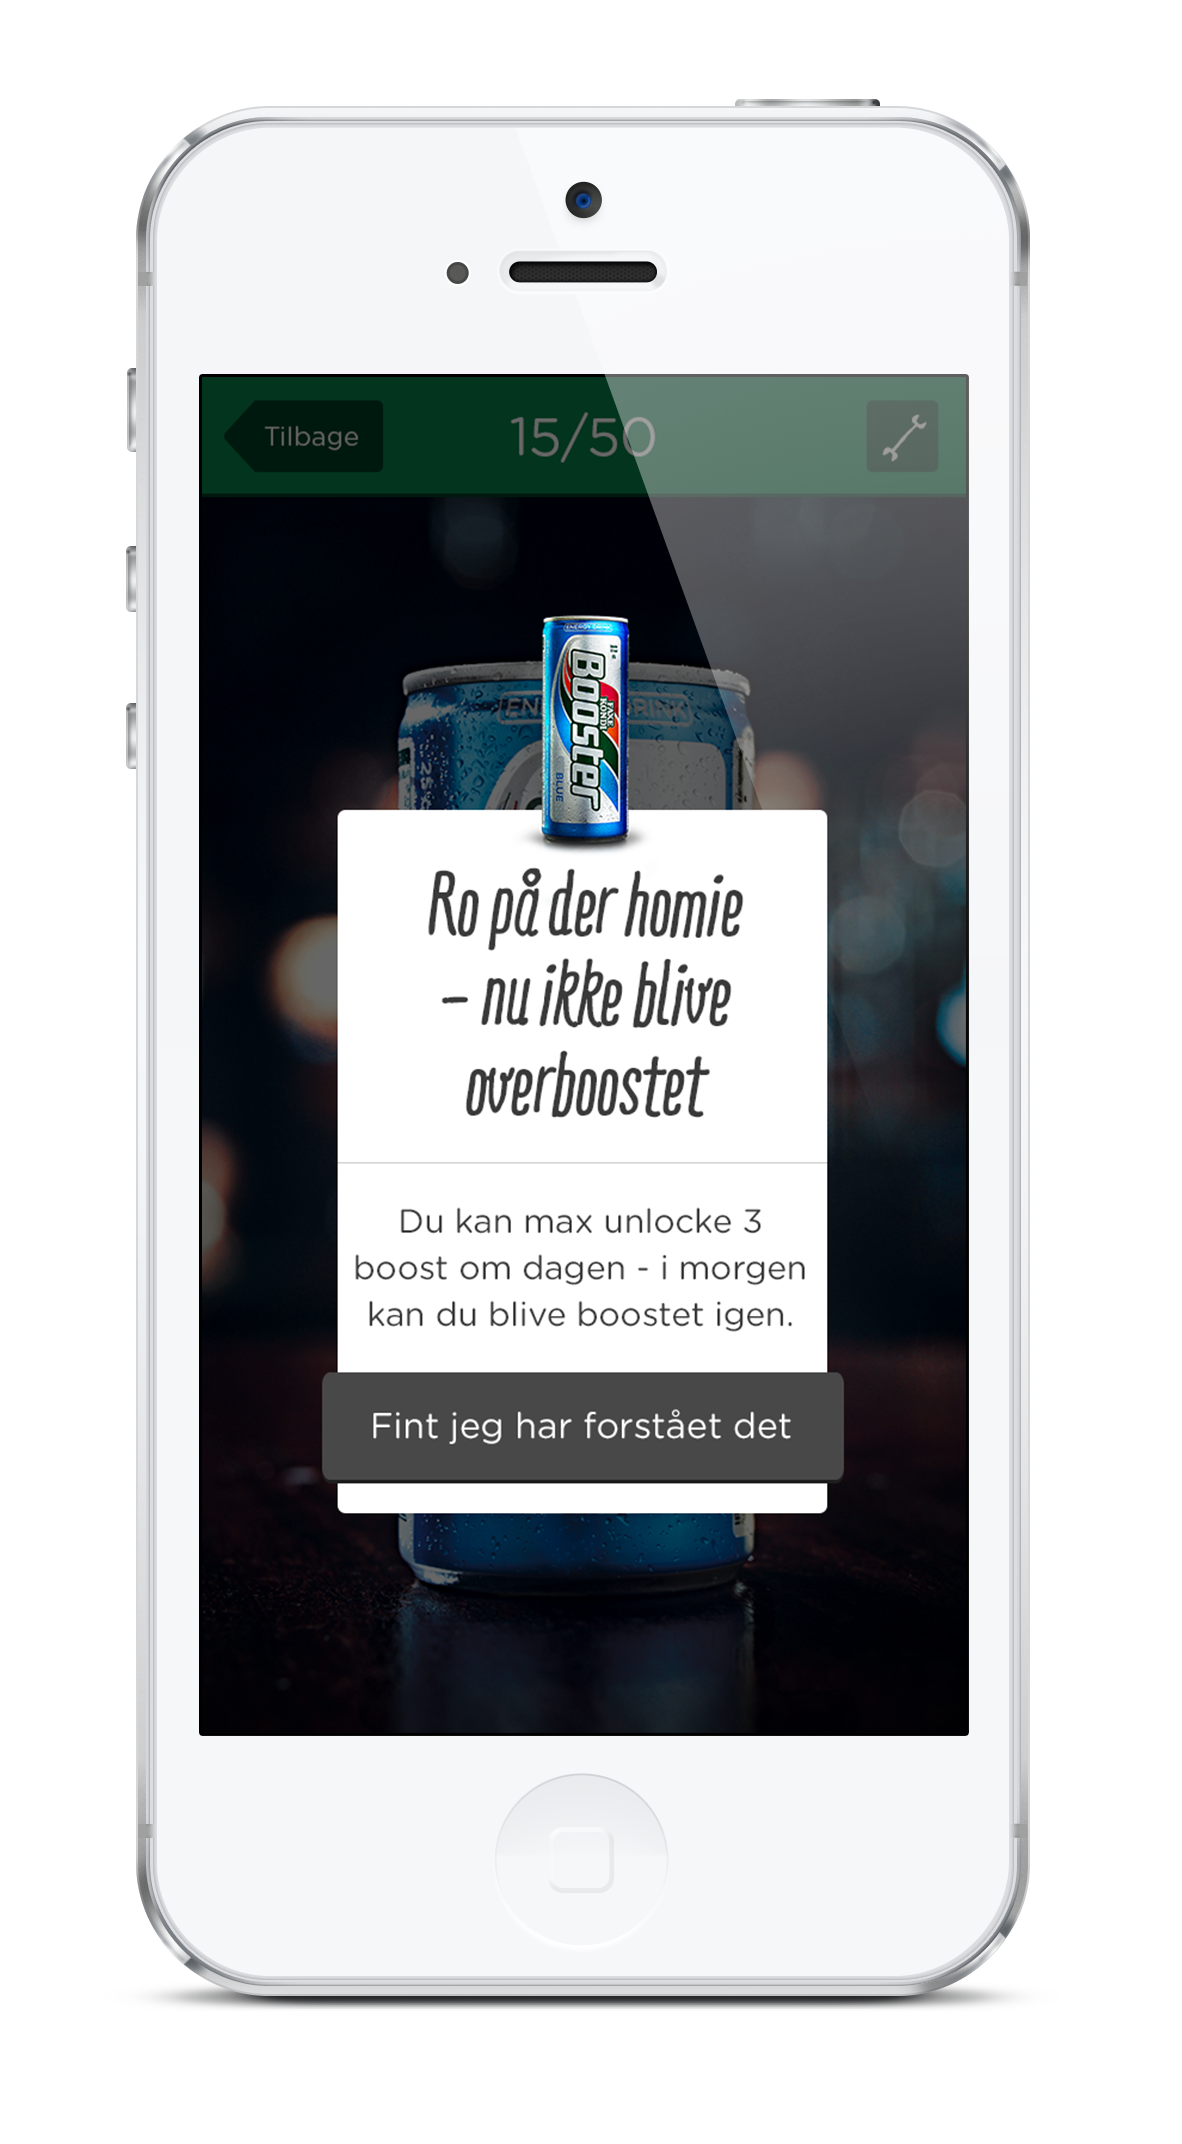 faxe kondi booster app smartphone itunes store Morten lybech augmented reality unibrew